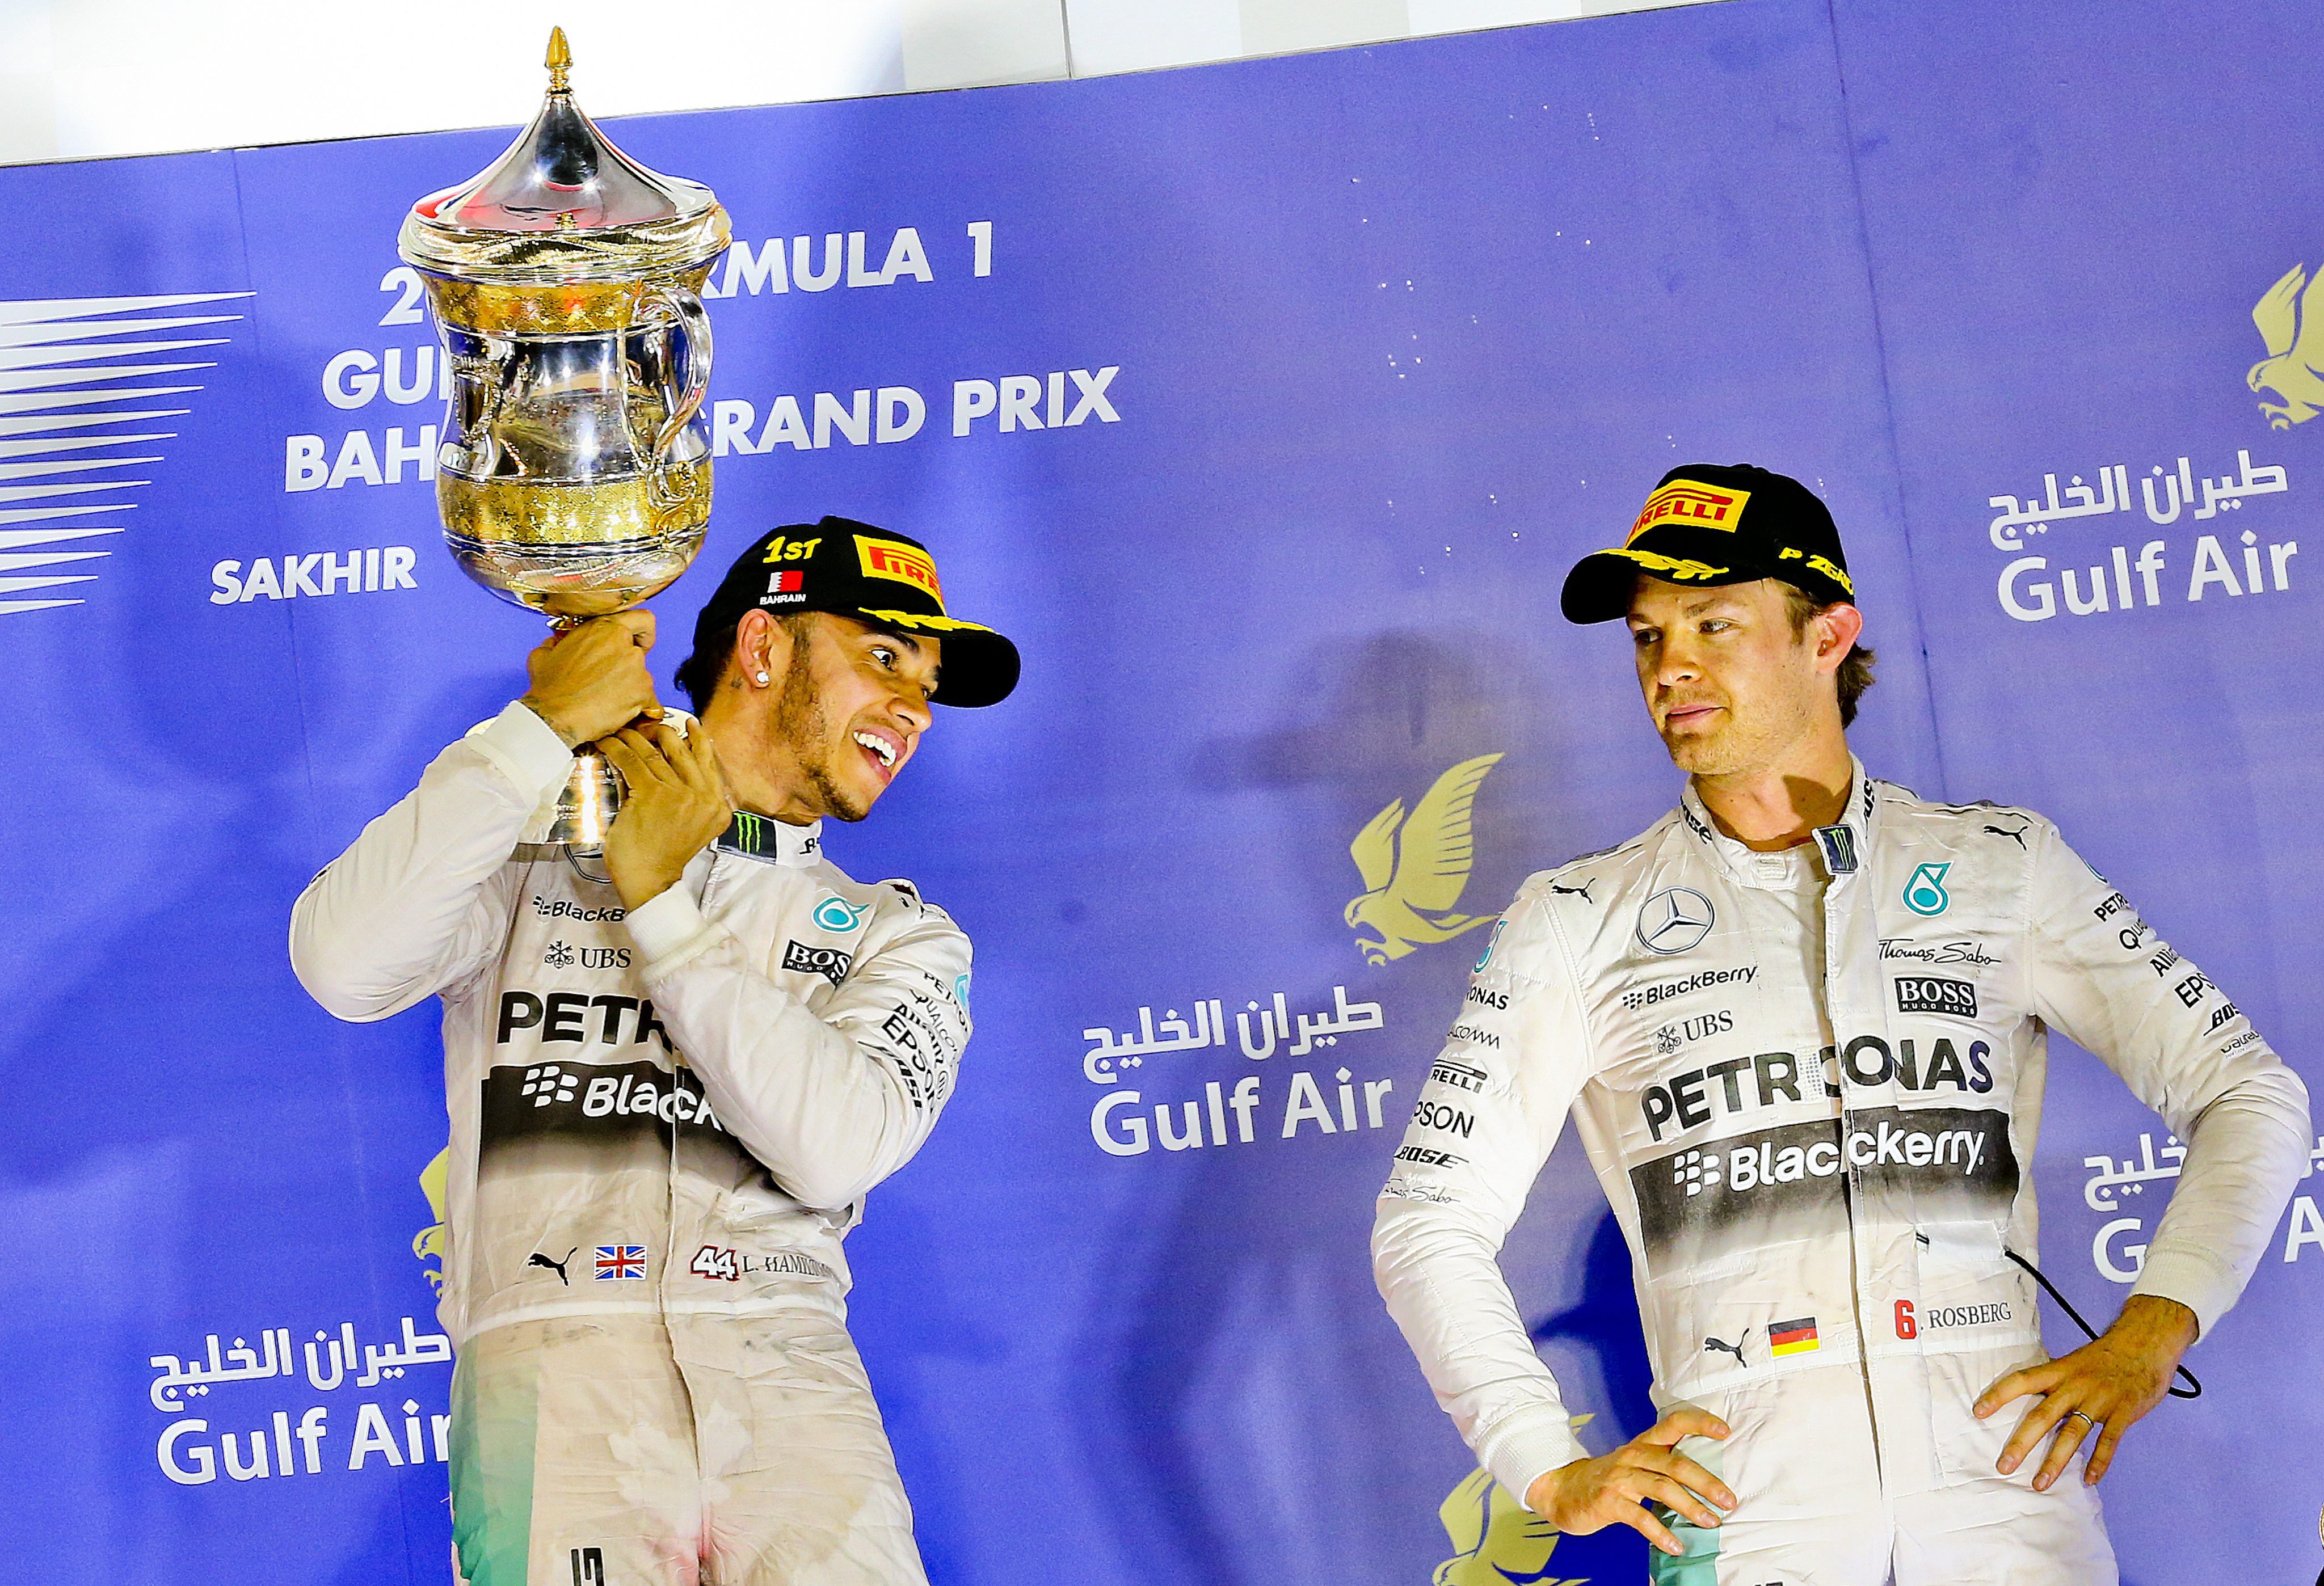 Lewis Hamilton of Mercedes celebrates his win next to third placed teammate Nico Rosberg following the Formula One Grand Prix of Bahrain at the Sakhir circuit near Manama. Photo: EPA